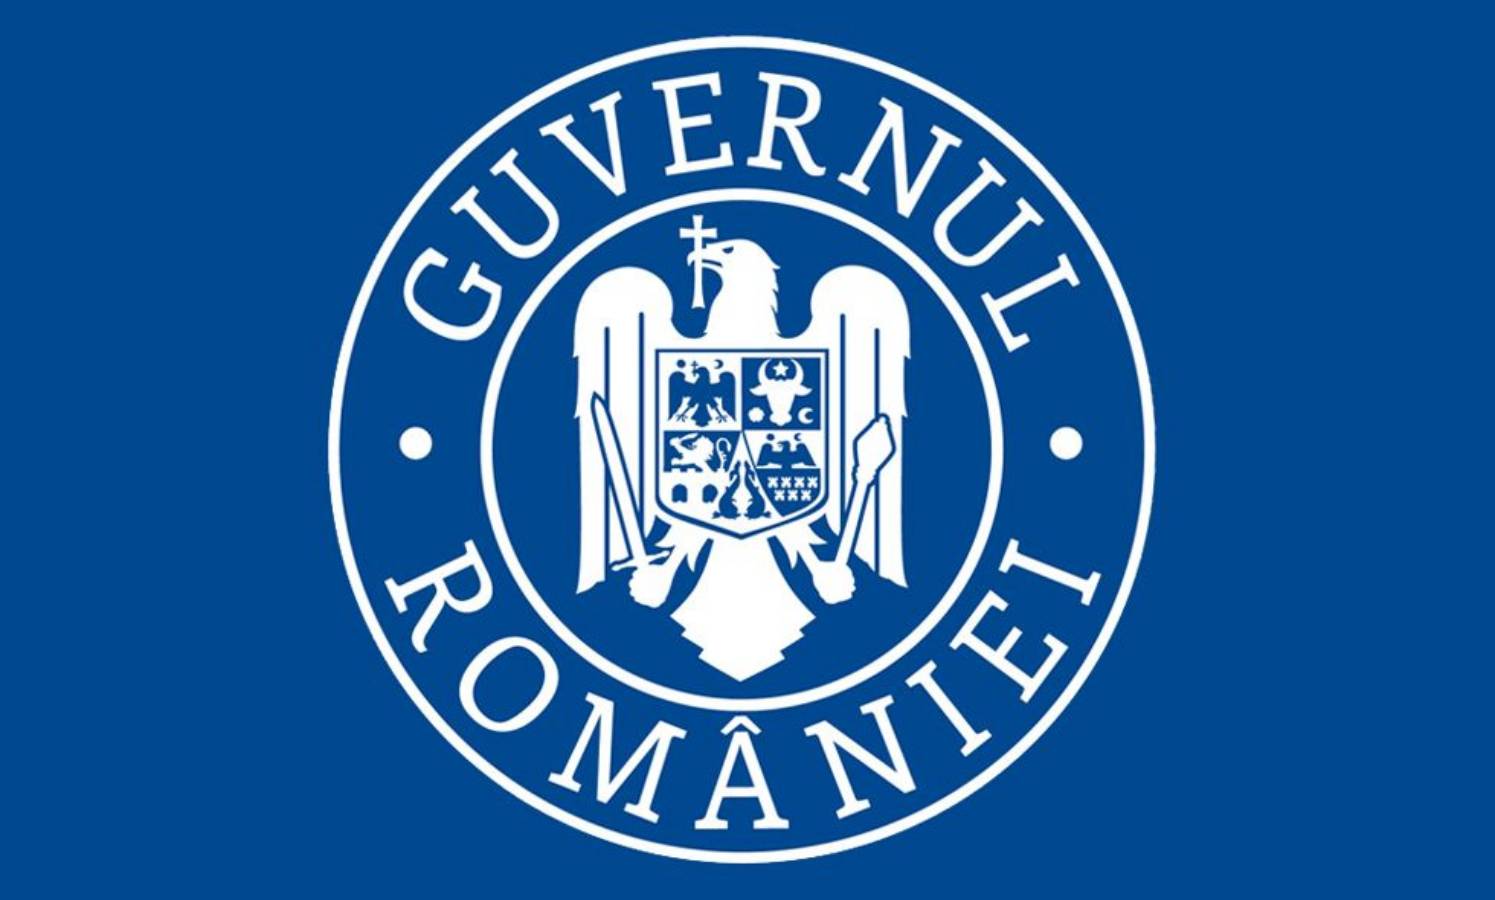 Regering van Roemenië Groot aantal vaccinatieafspraken